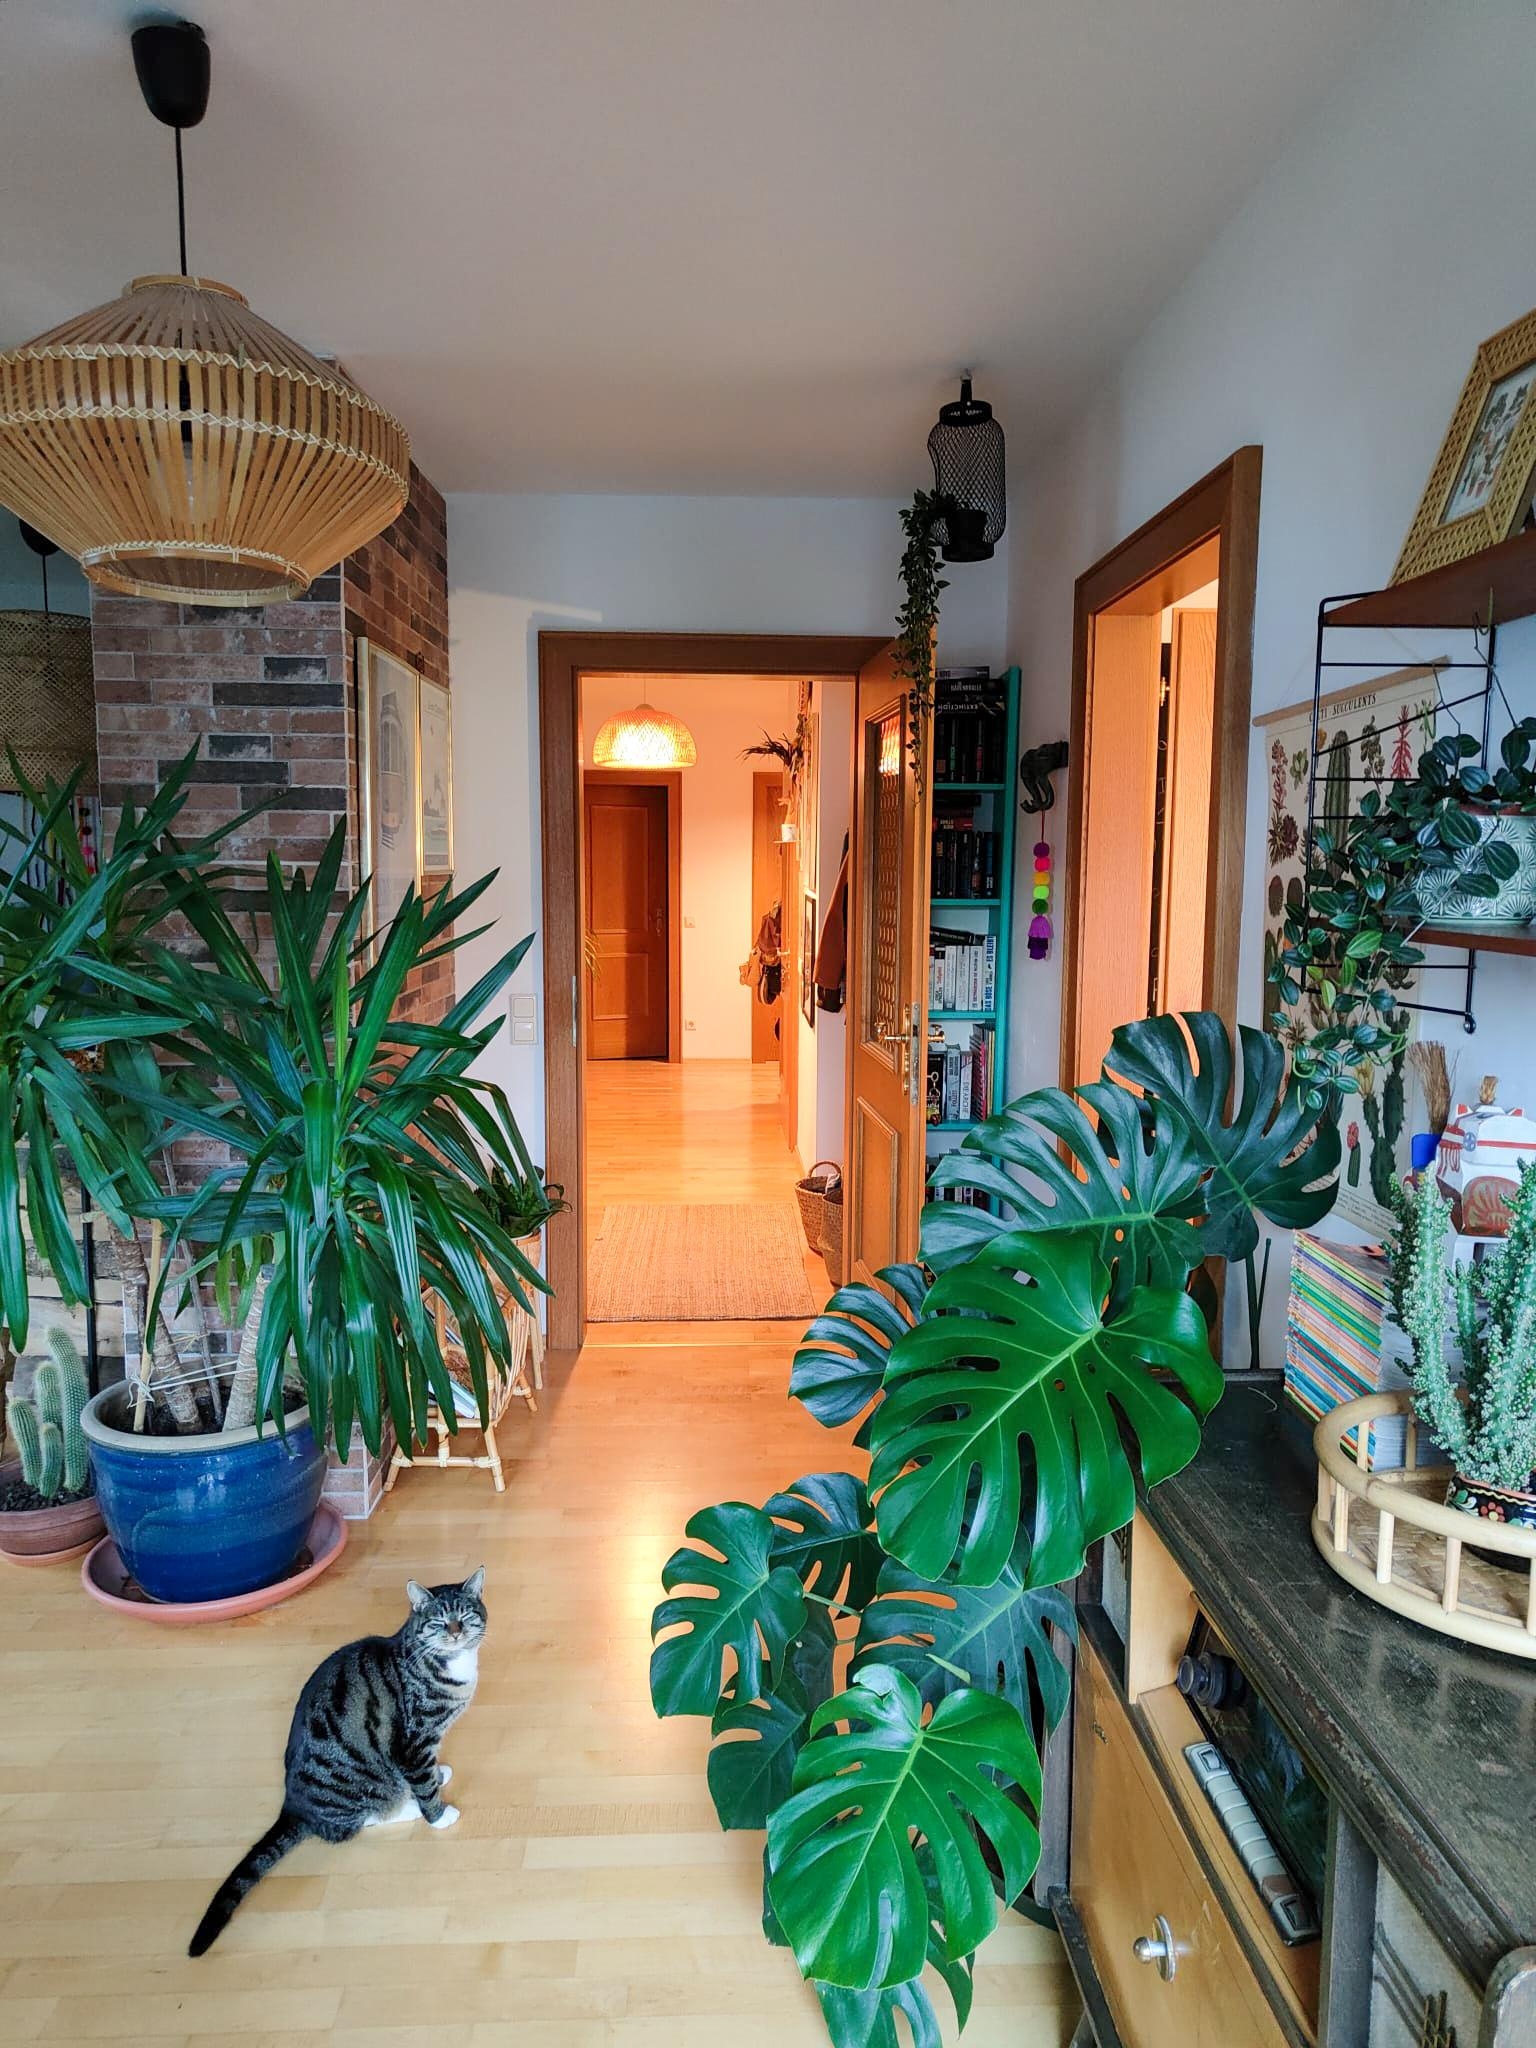 Caturday 🐱❤️ #livingroom #houseplants